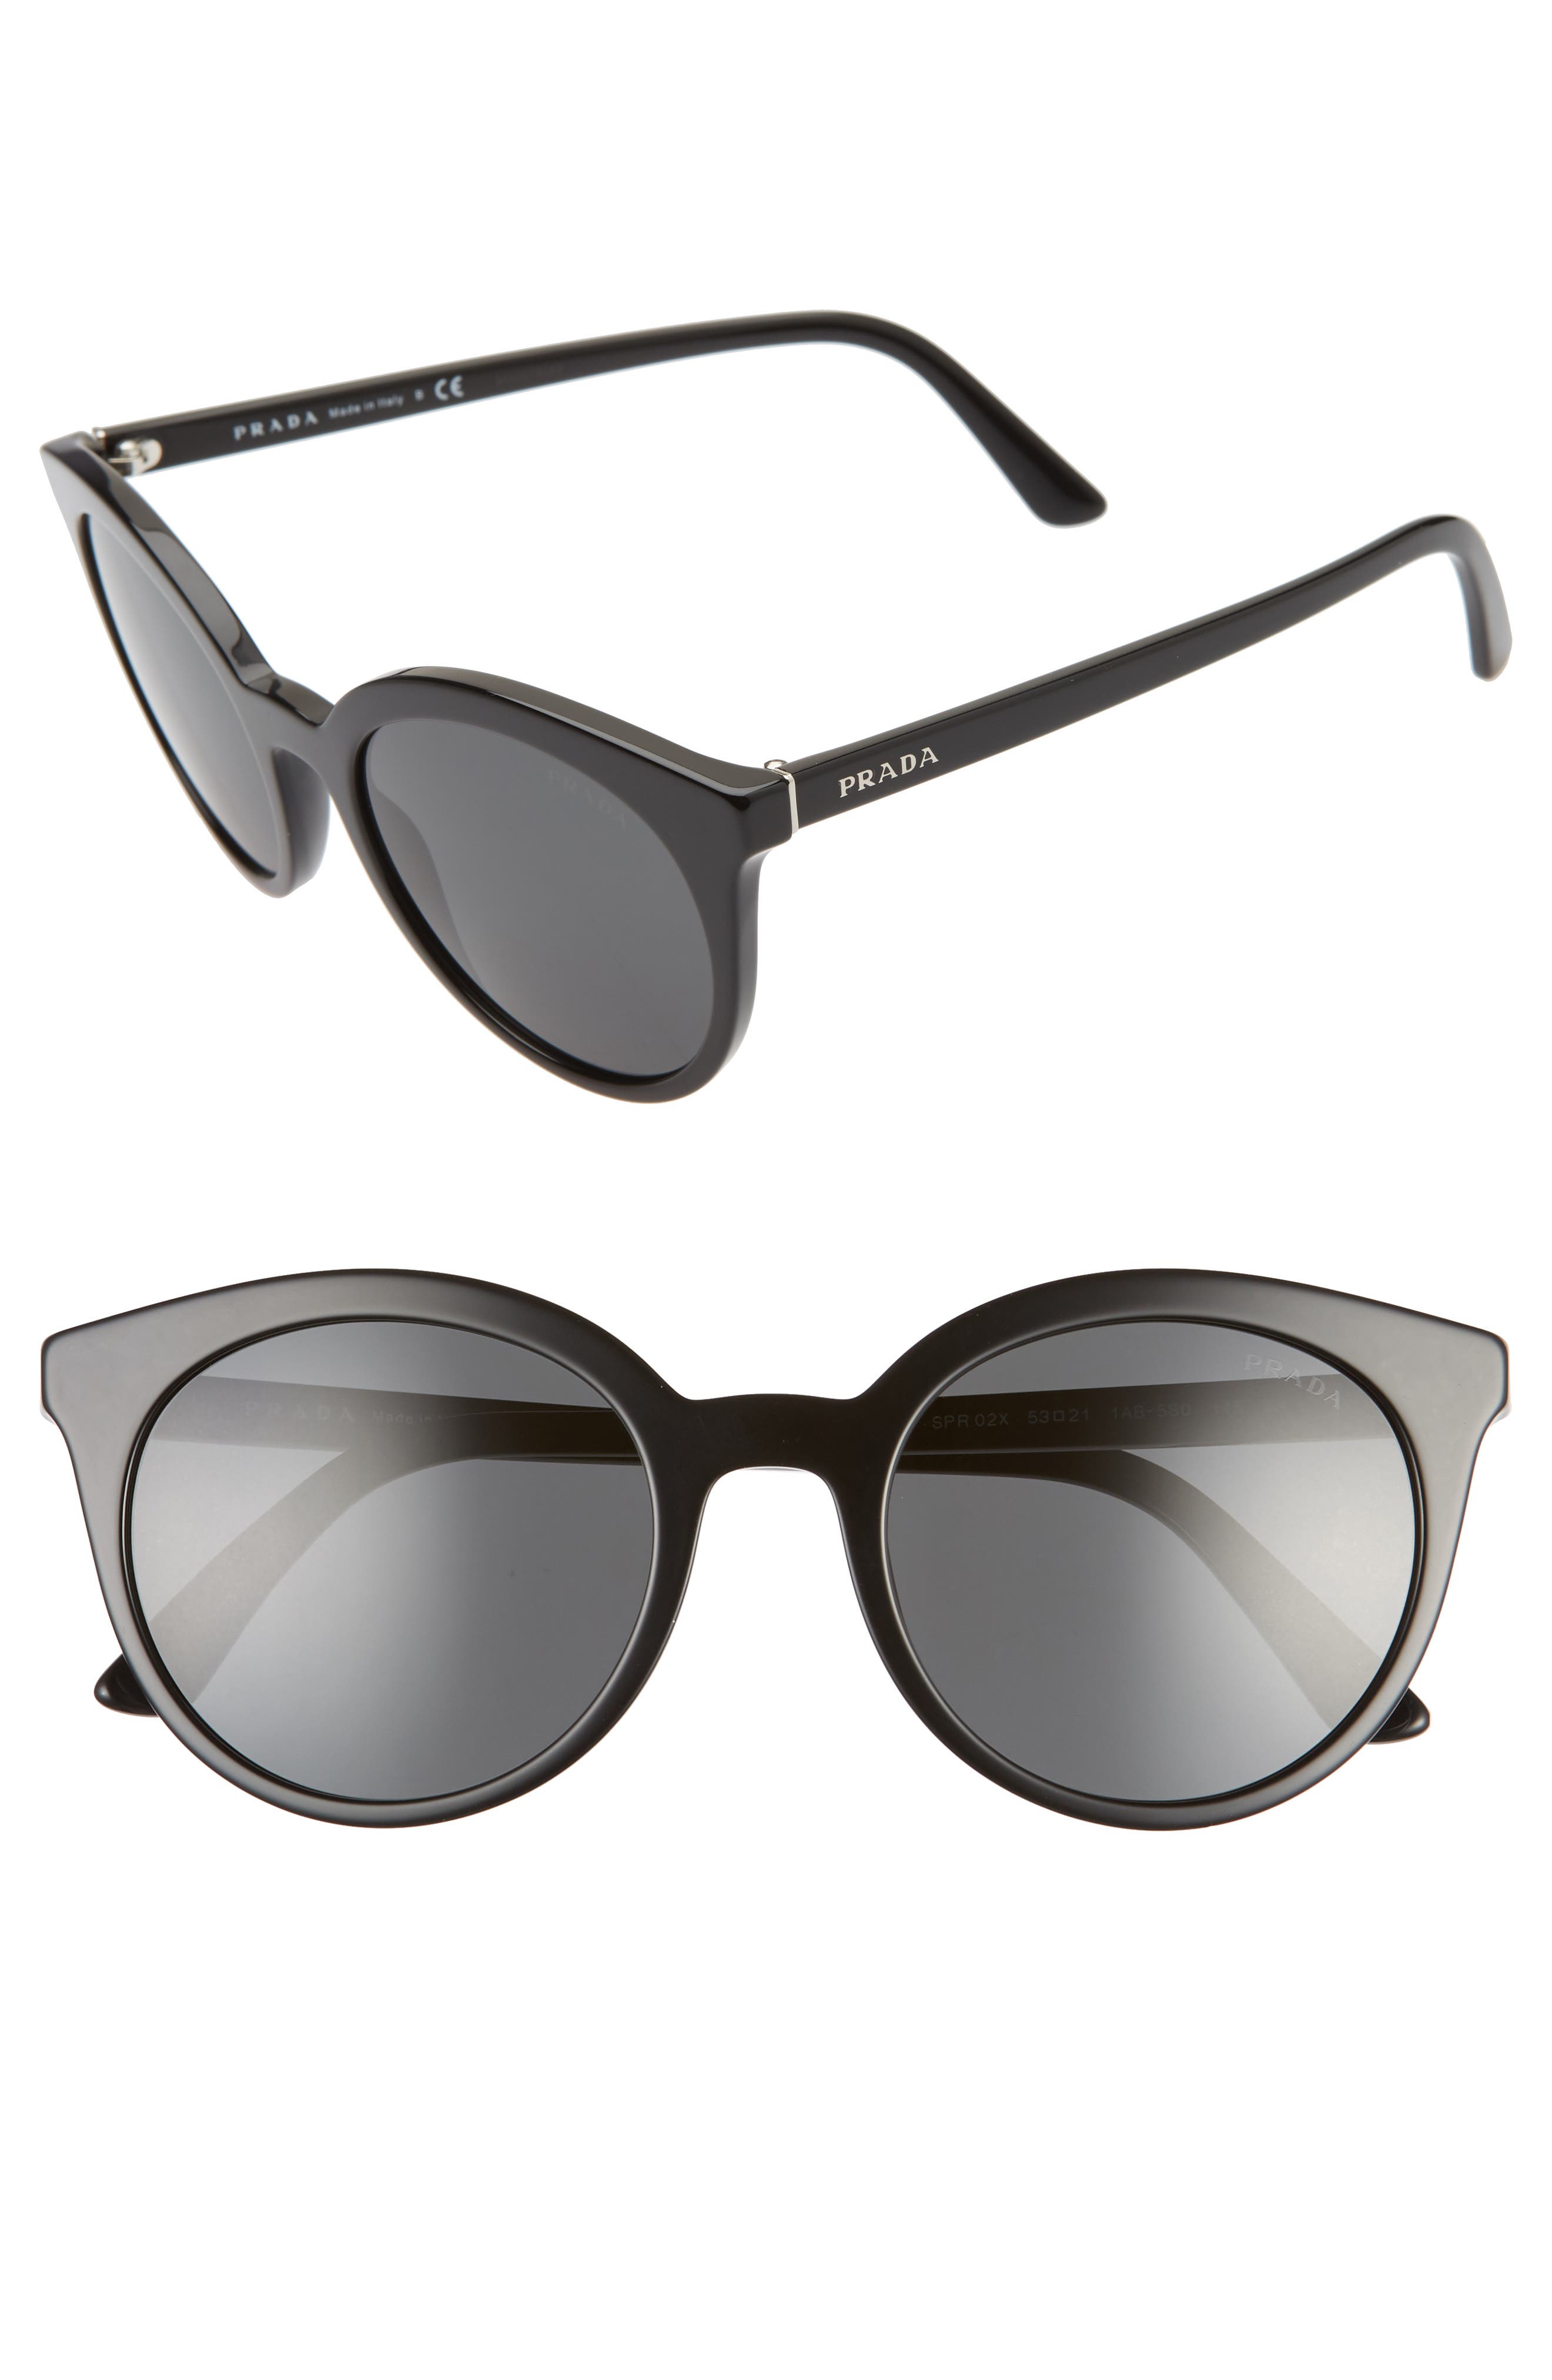 Prada 53mm Round Cat Eye Sunglasses in Black/Grey Gradient at Nordstrom